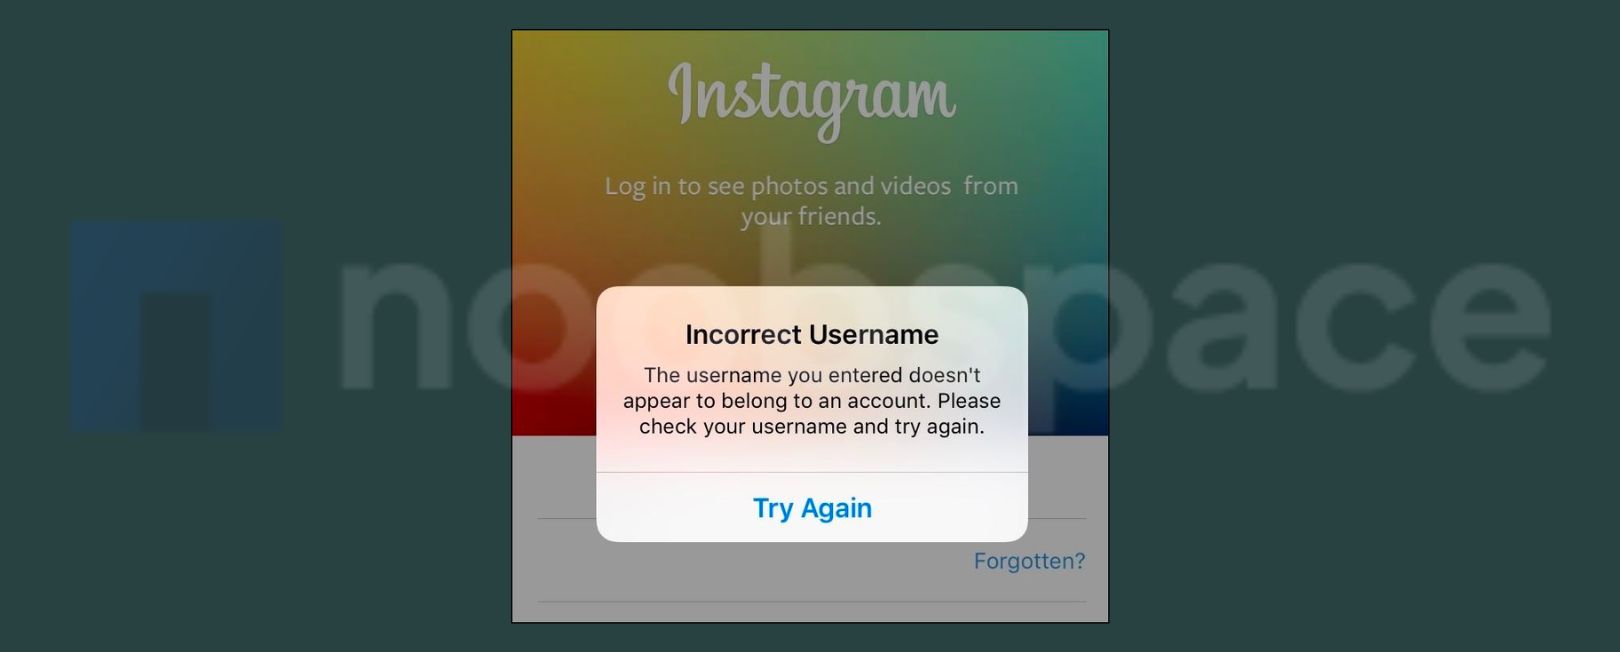 incorrect username instagram error pop up 2023